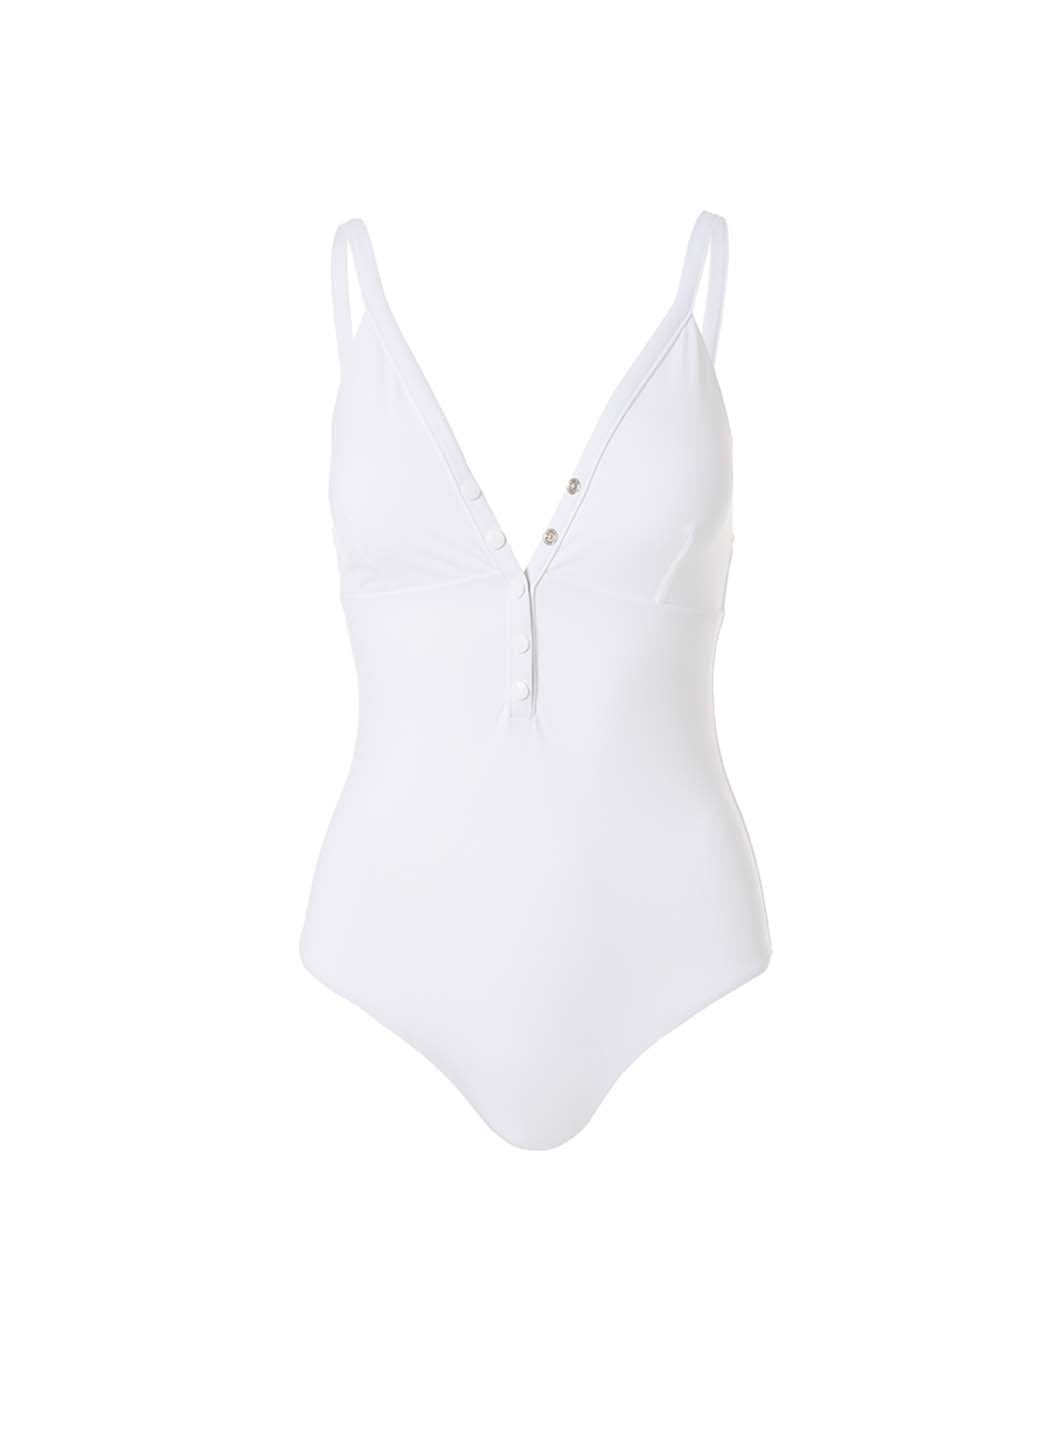 Nepal White Swimsuit